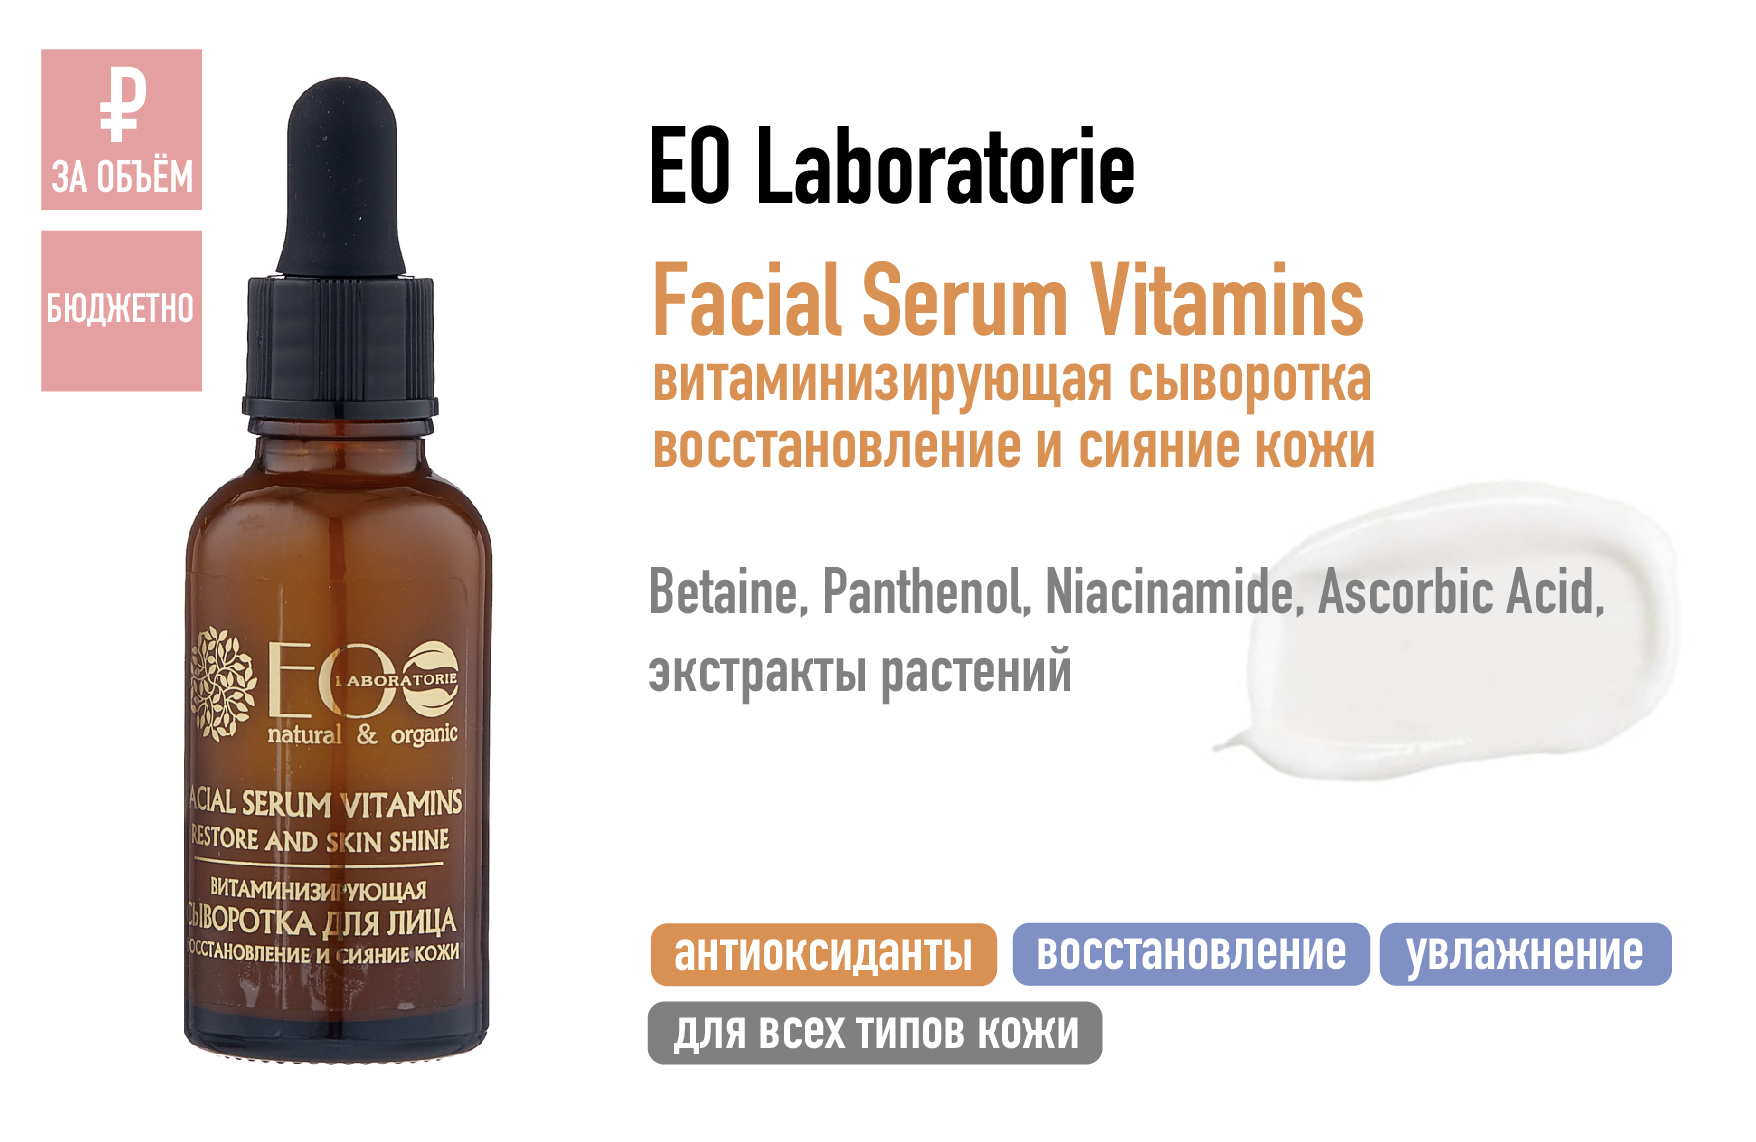 EO Laboratorie Facial Serum Vitamins / витаминизирующая сыворотка Восстановление и сияние кожи